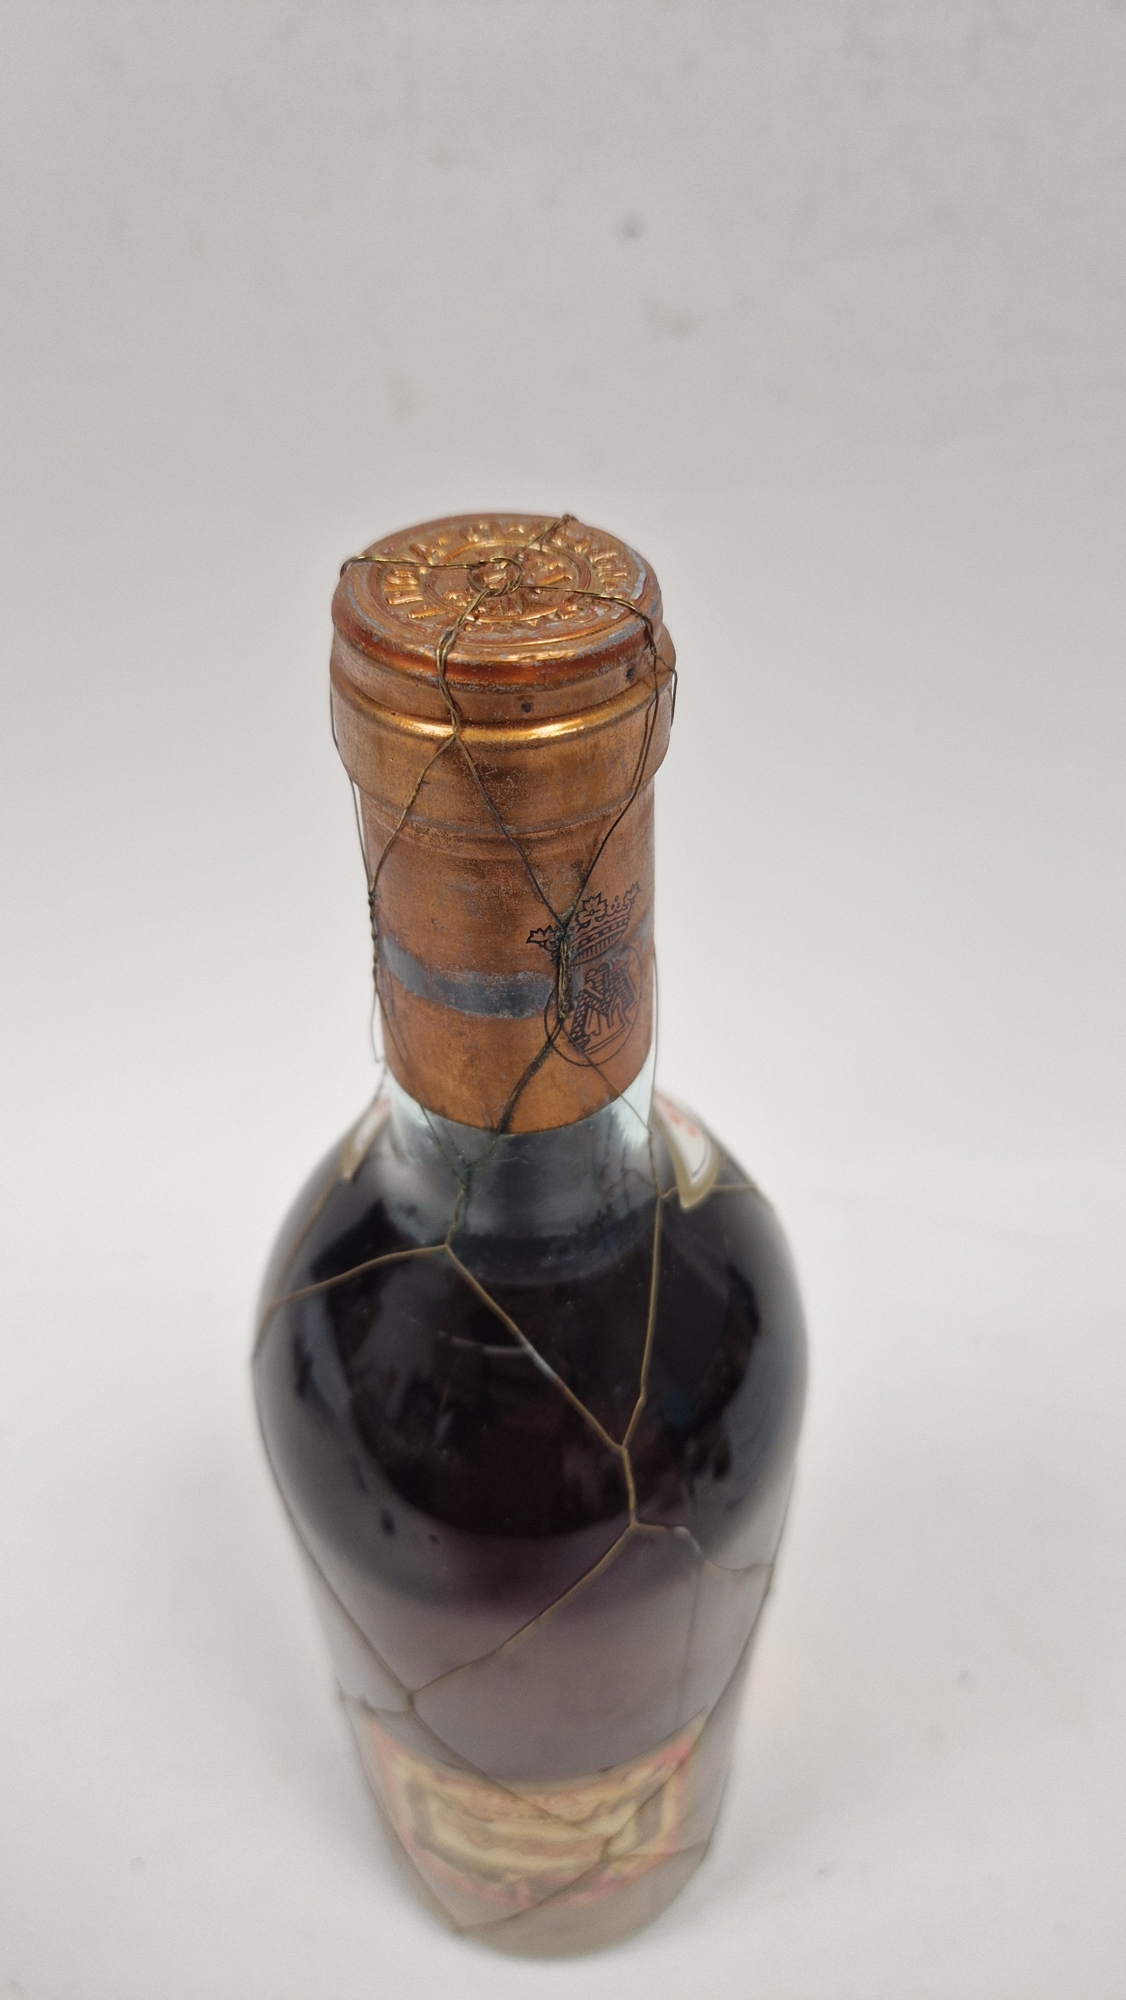 Bottle of Bodegas Marques de Murrieta Castillo Ygay Gran Reserva 1962 rioja (low neck)  Condition - Image 3 of 5